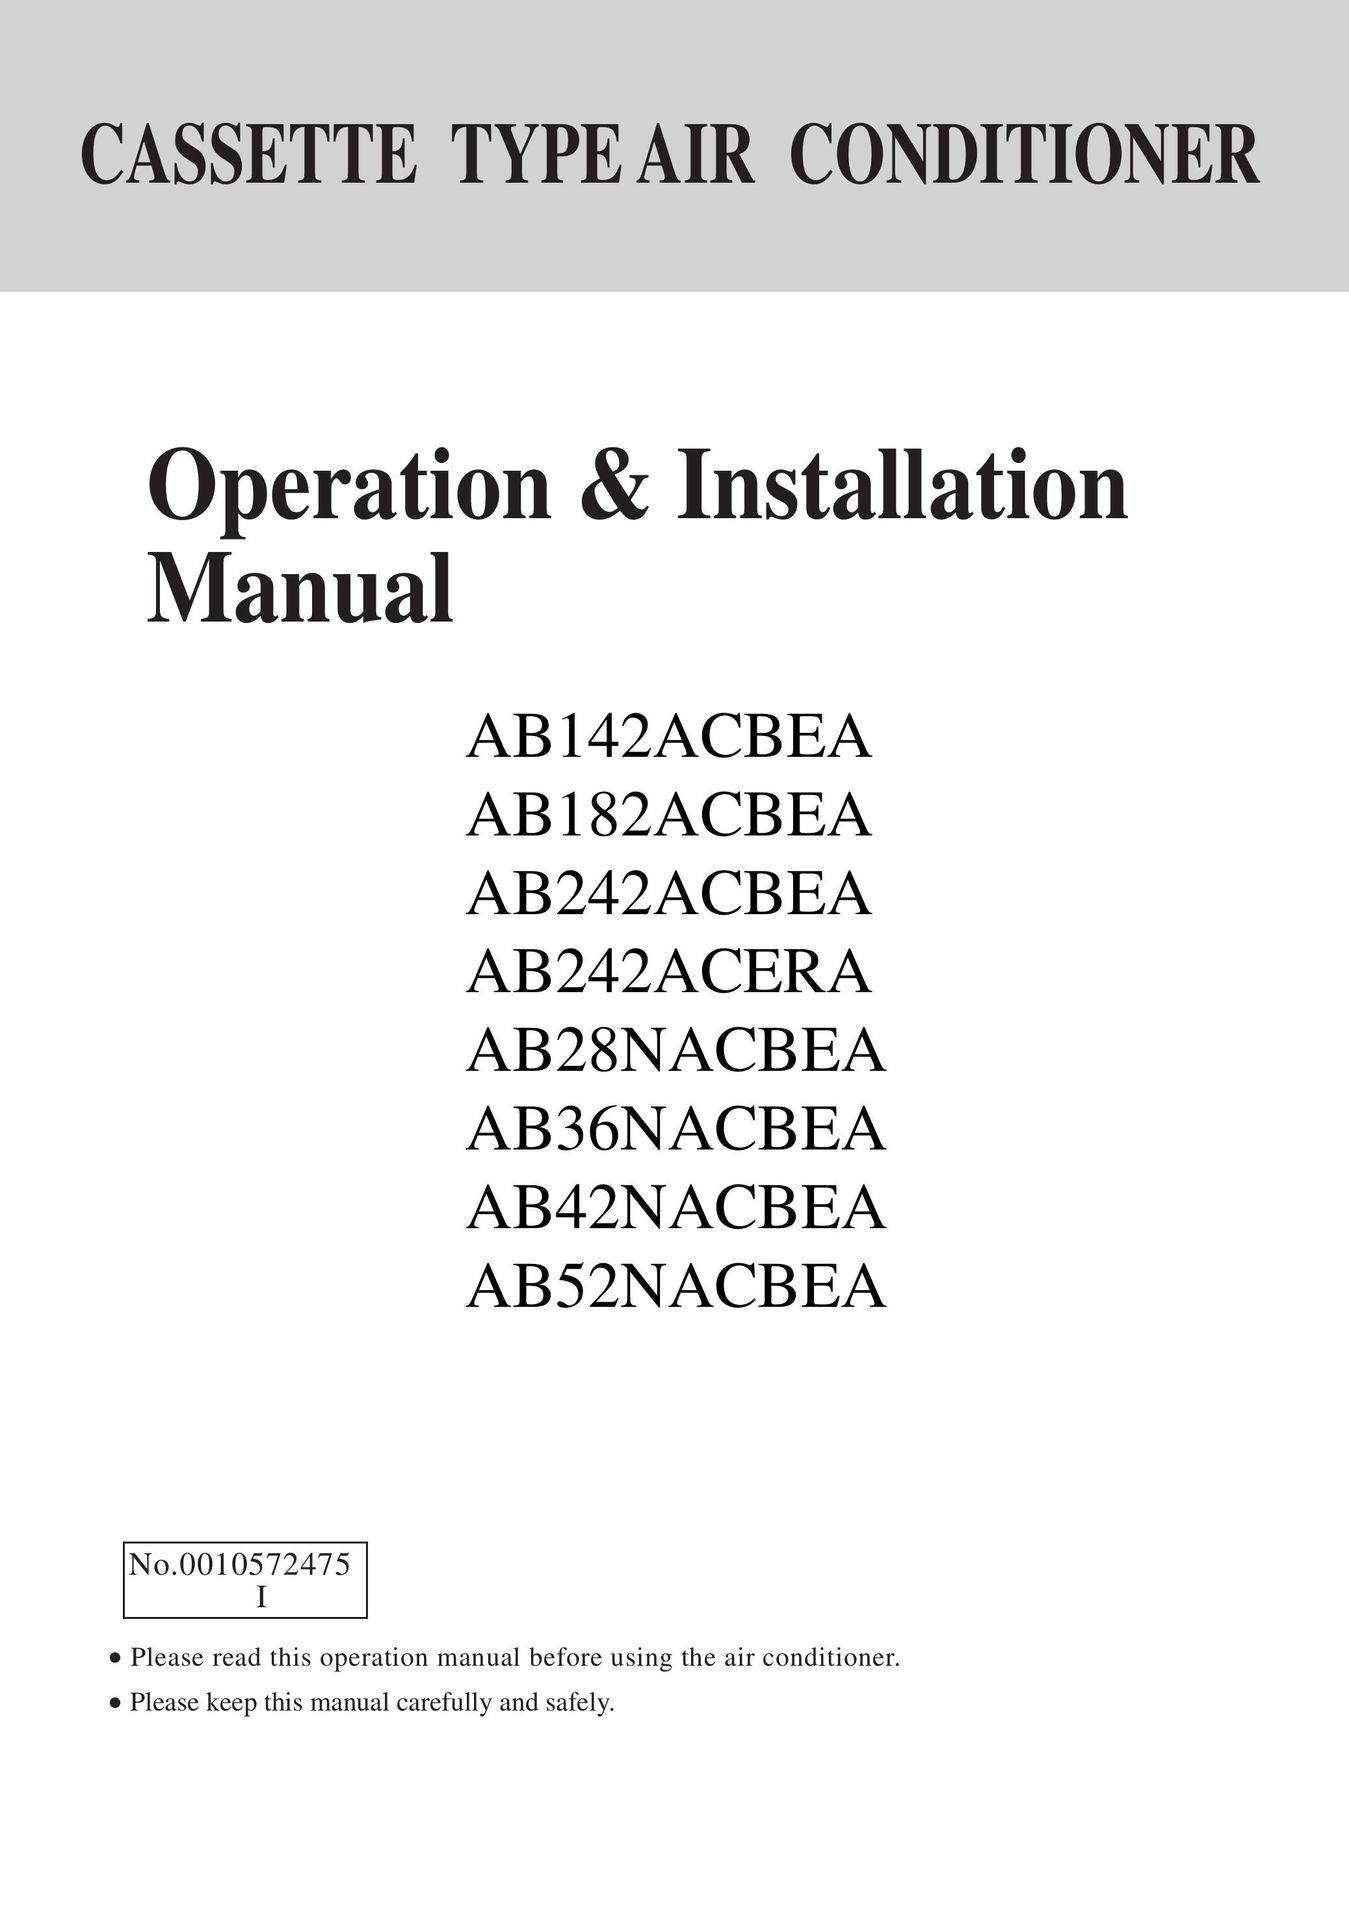 Haier AB36NACBEA Air Conditioner User Manual